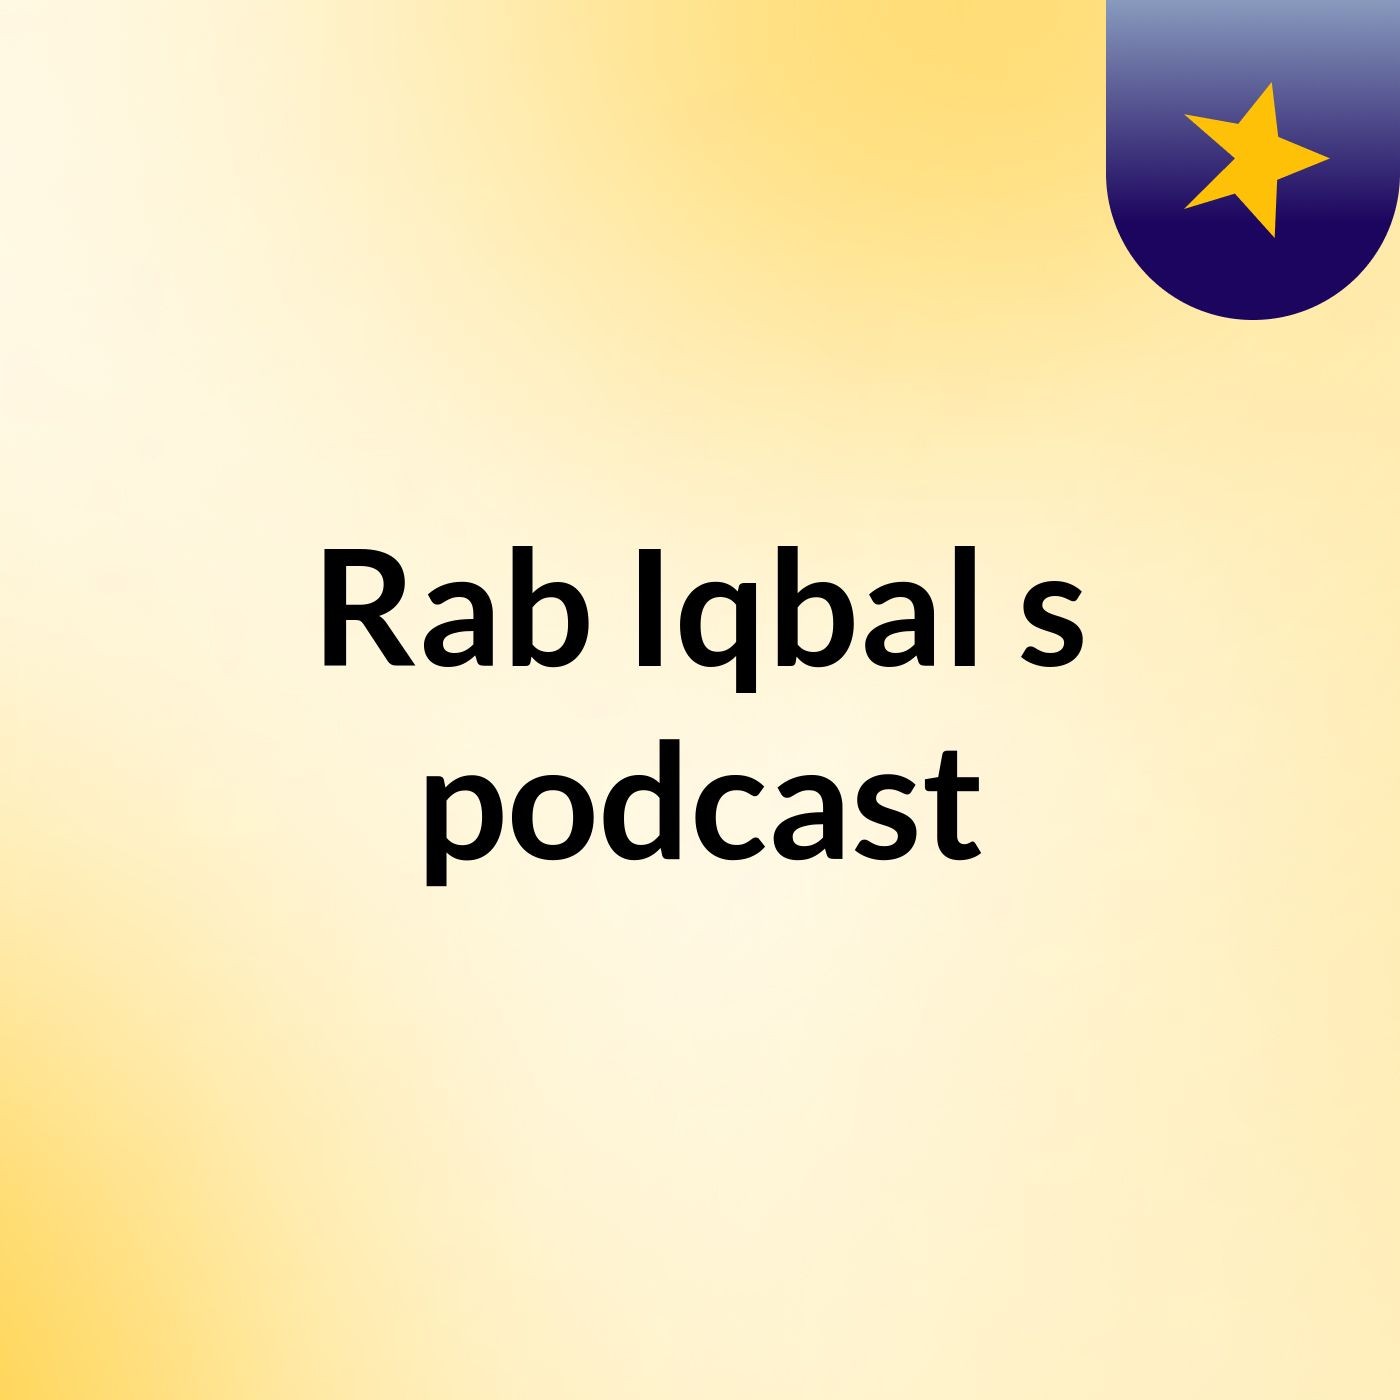 Rab Iqbal's podcast